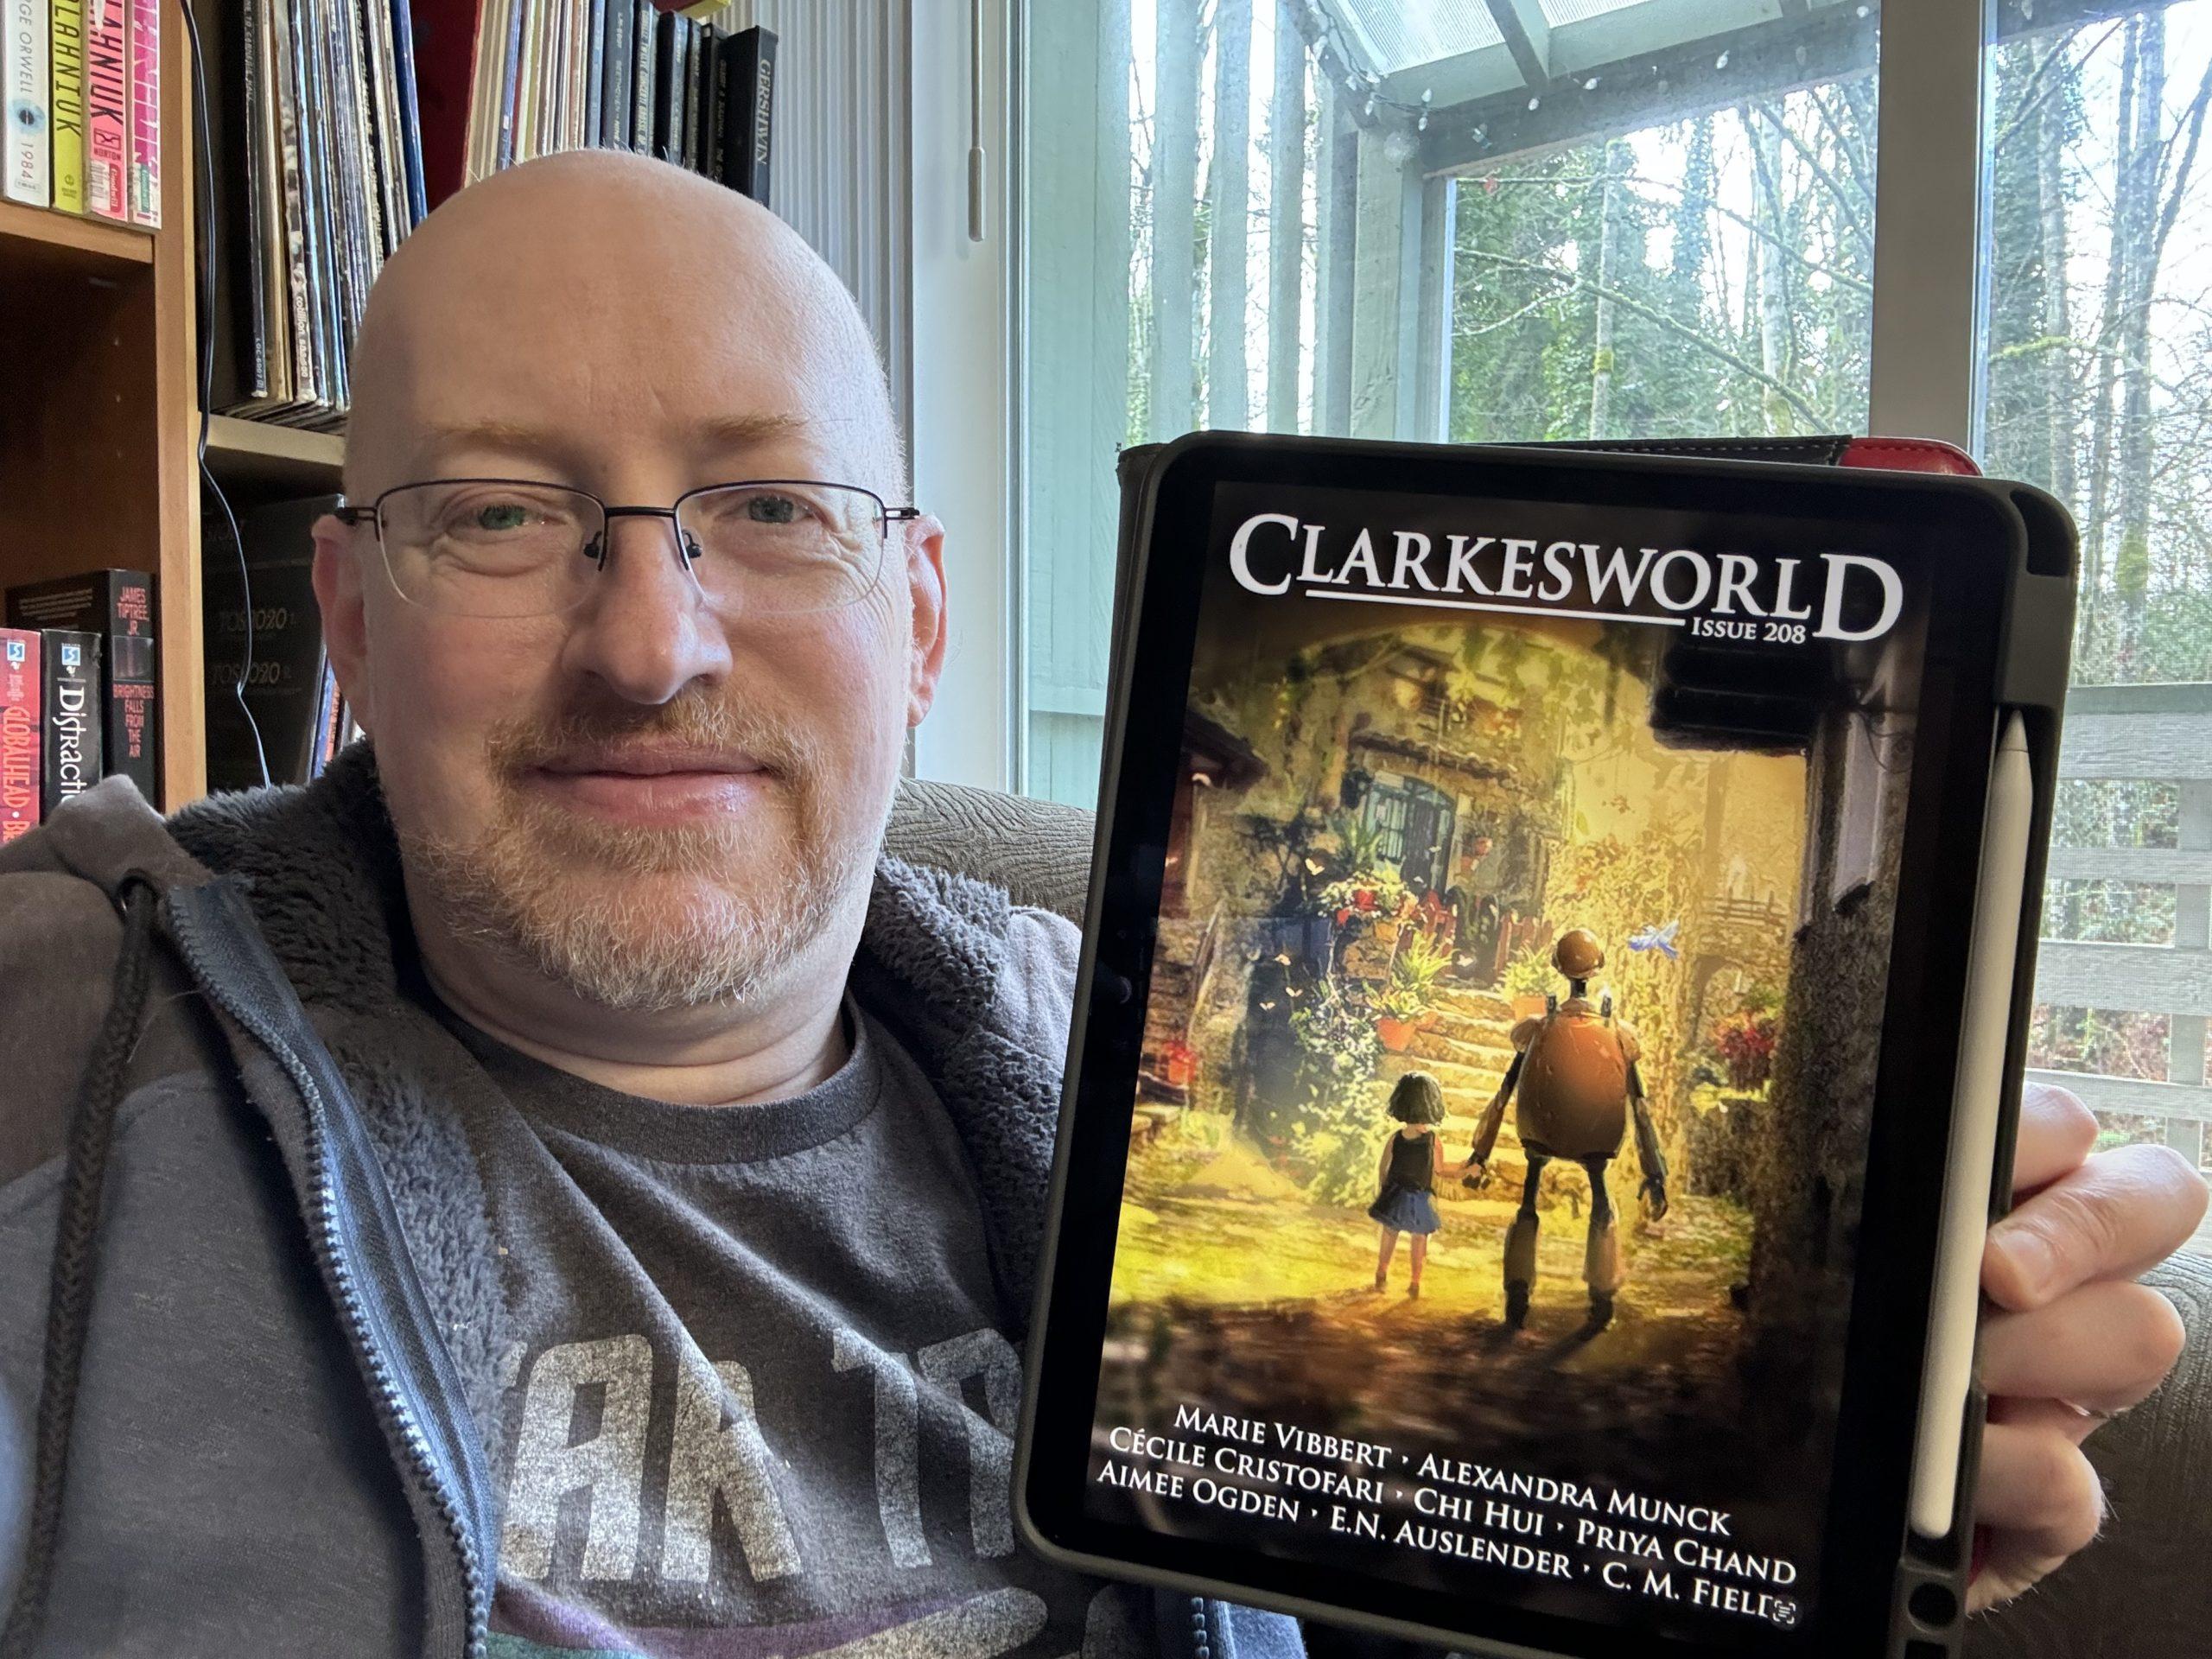 Me holding Clarkesworld 208 on my iPad.